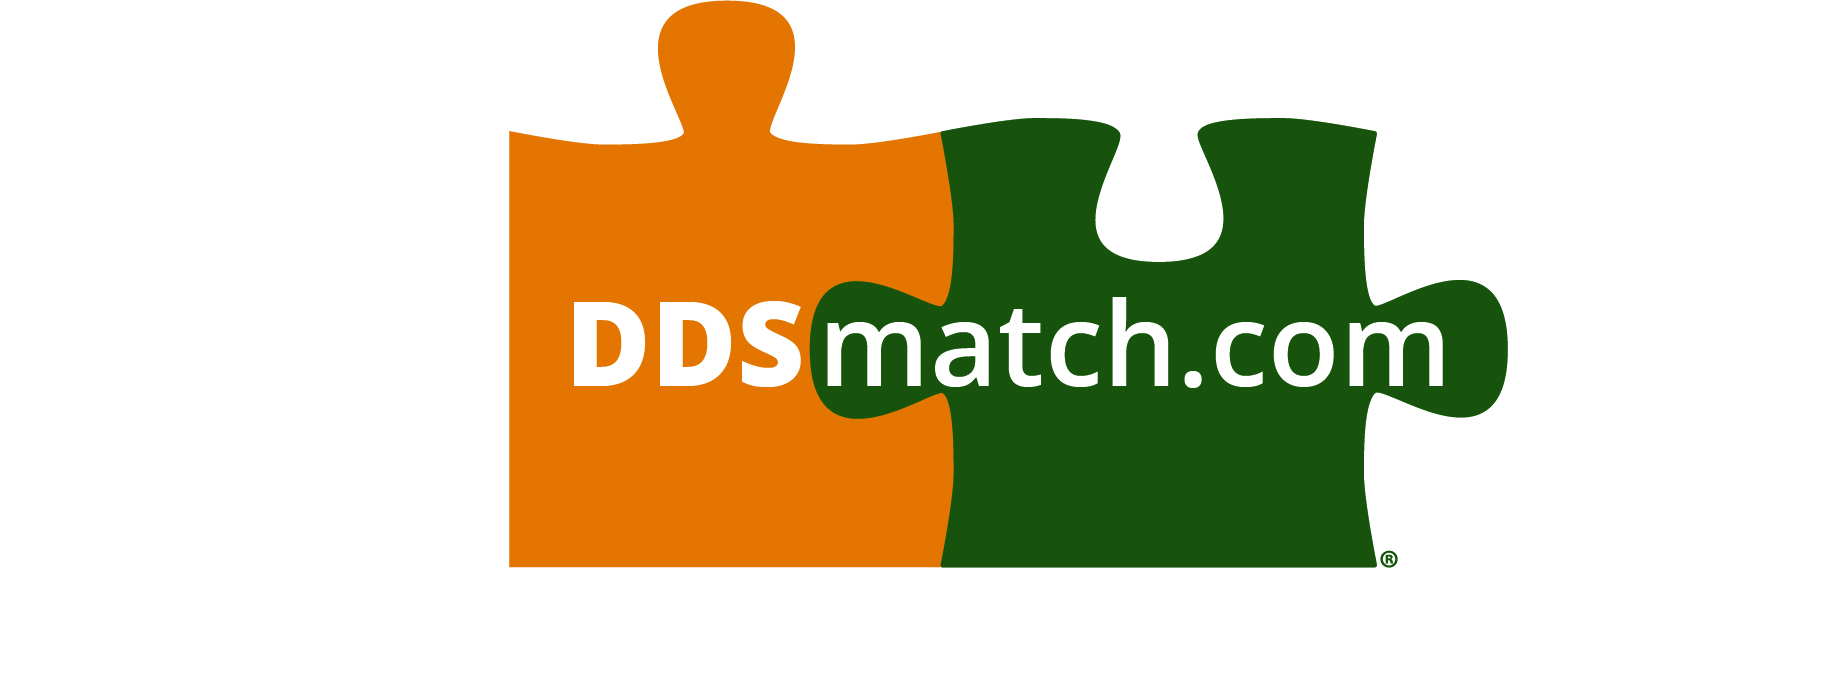 ddsmatch.com - Sean Sullivan Logo